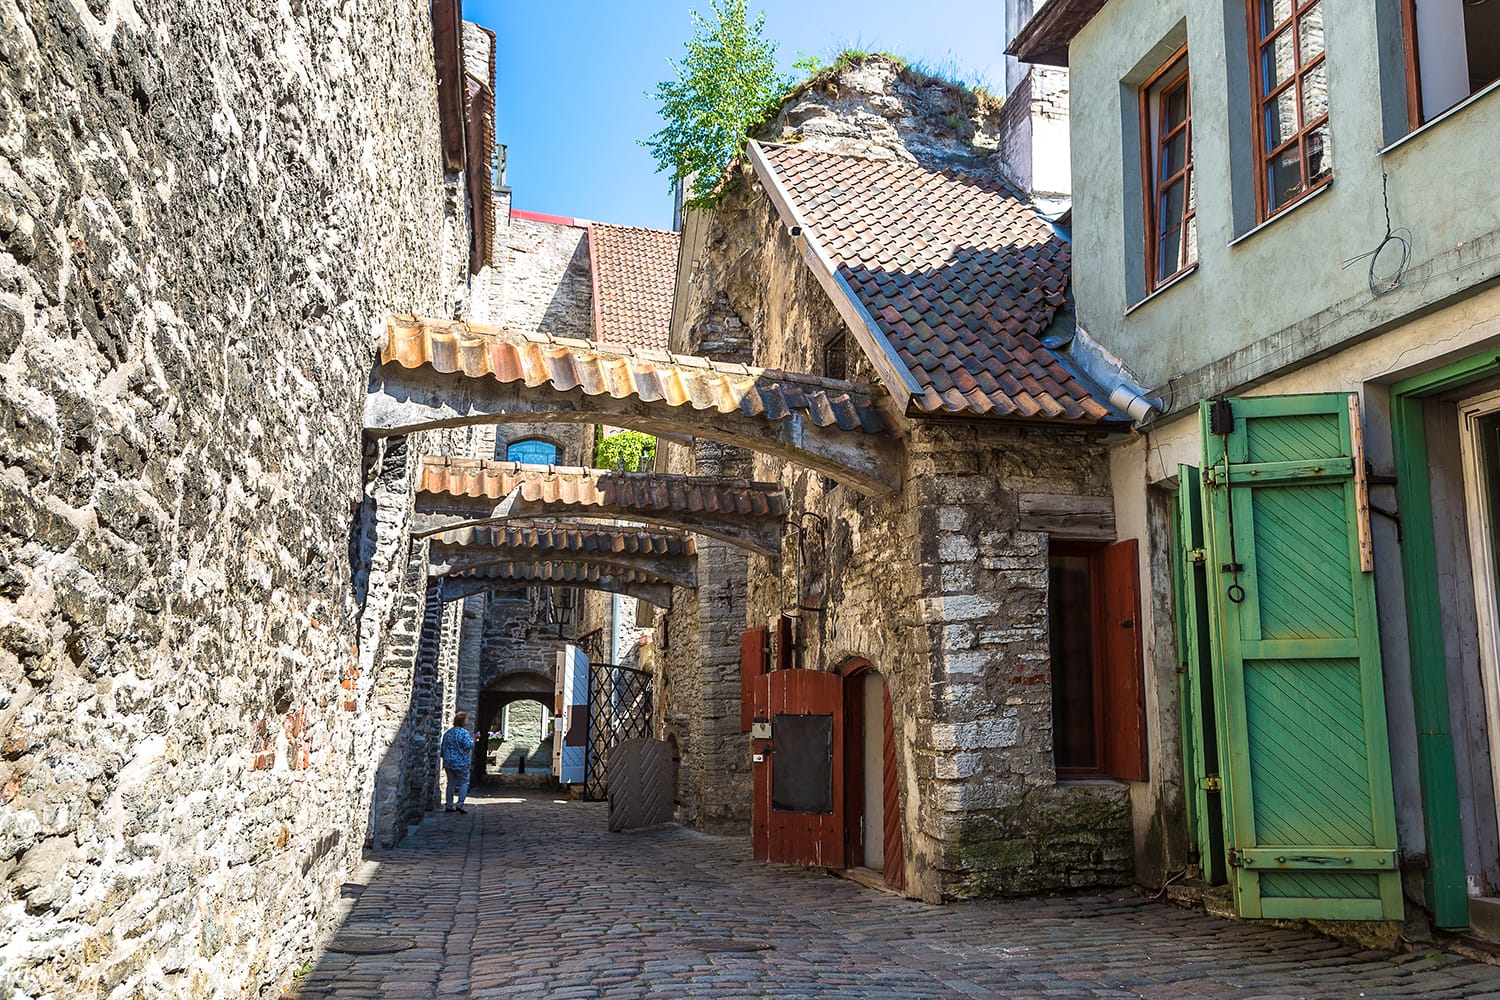 St Catherine's passage - historical cobbled street in old town of Tallinn, Estonia